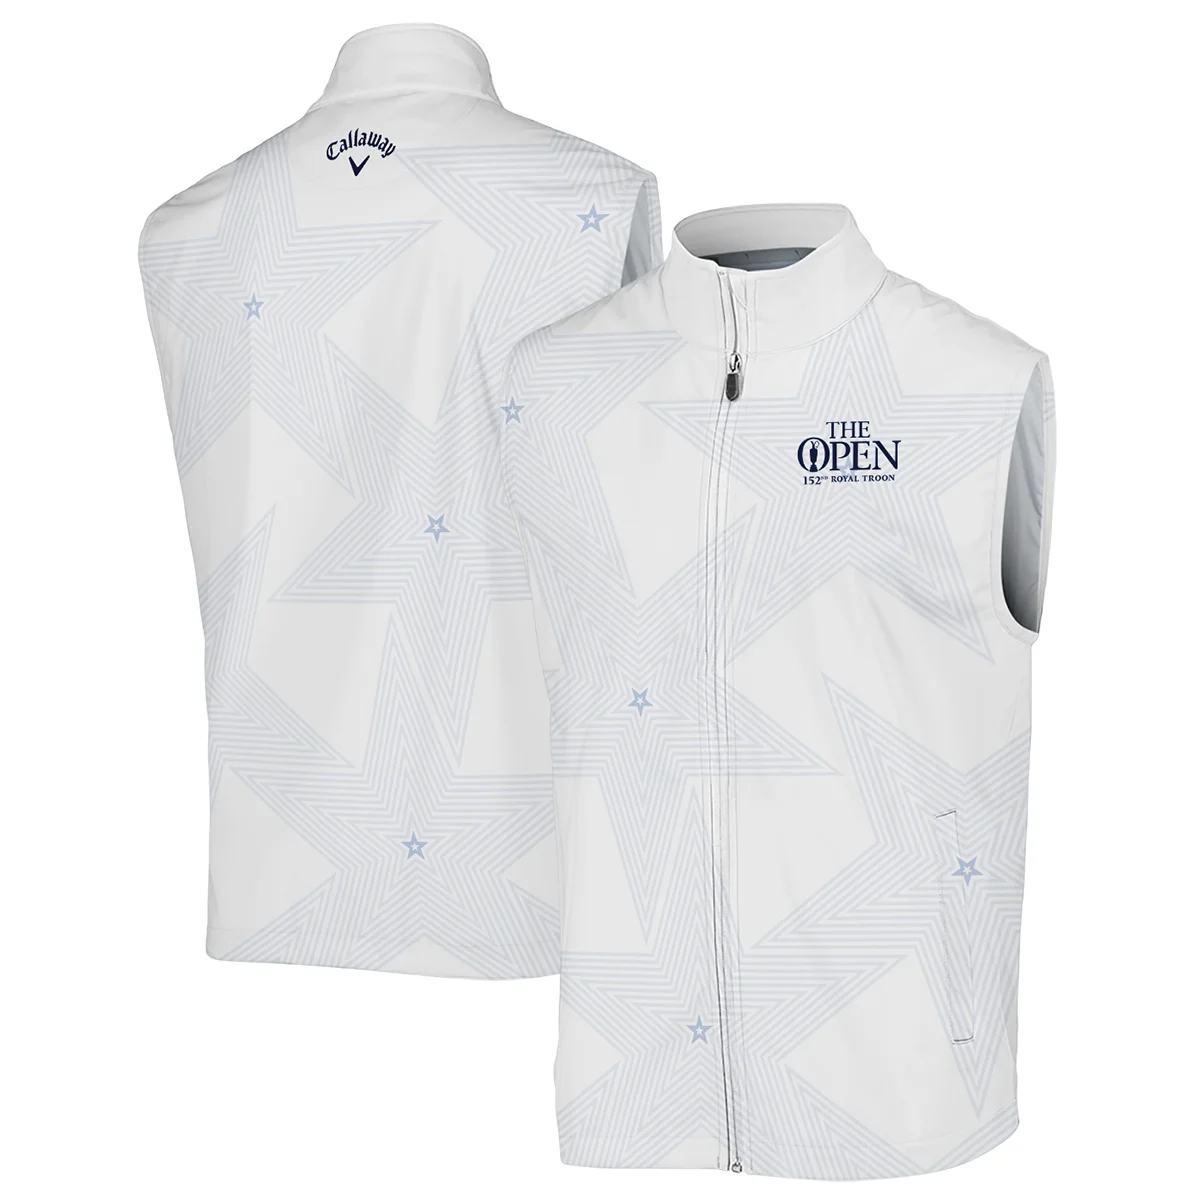 152nd The Open Championship Golf Callaway Sleeveless Jacket Stars White Navy Golf Sports All Over Print Sleeveless Jacket